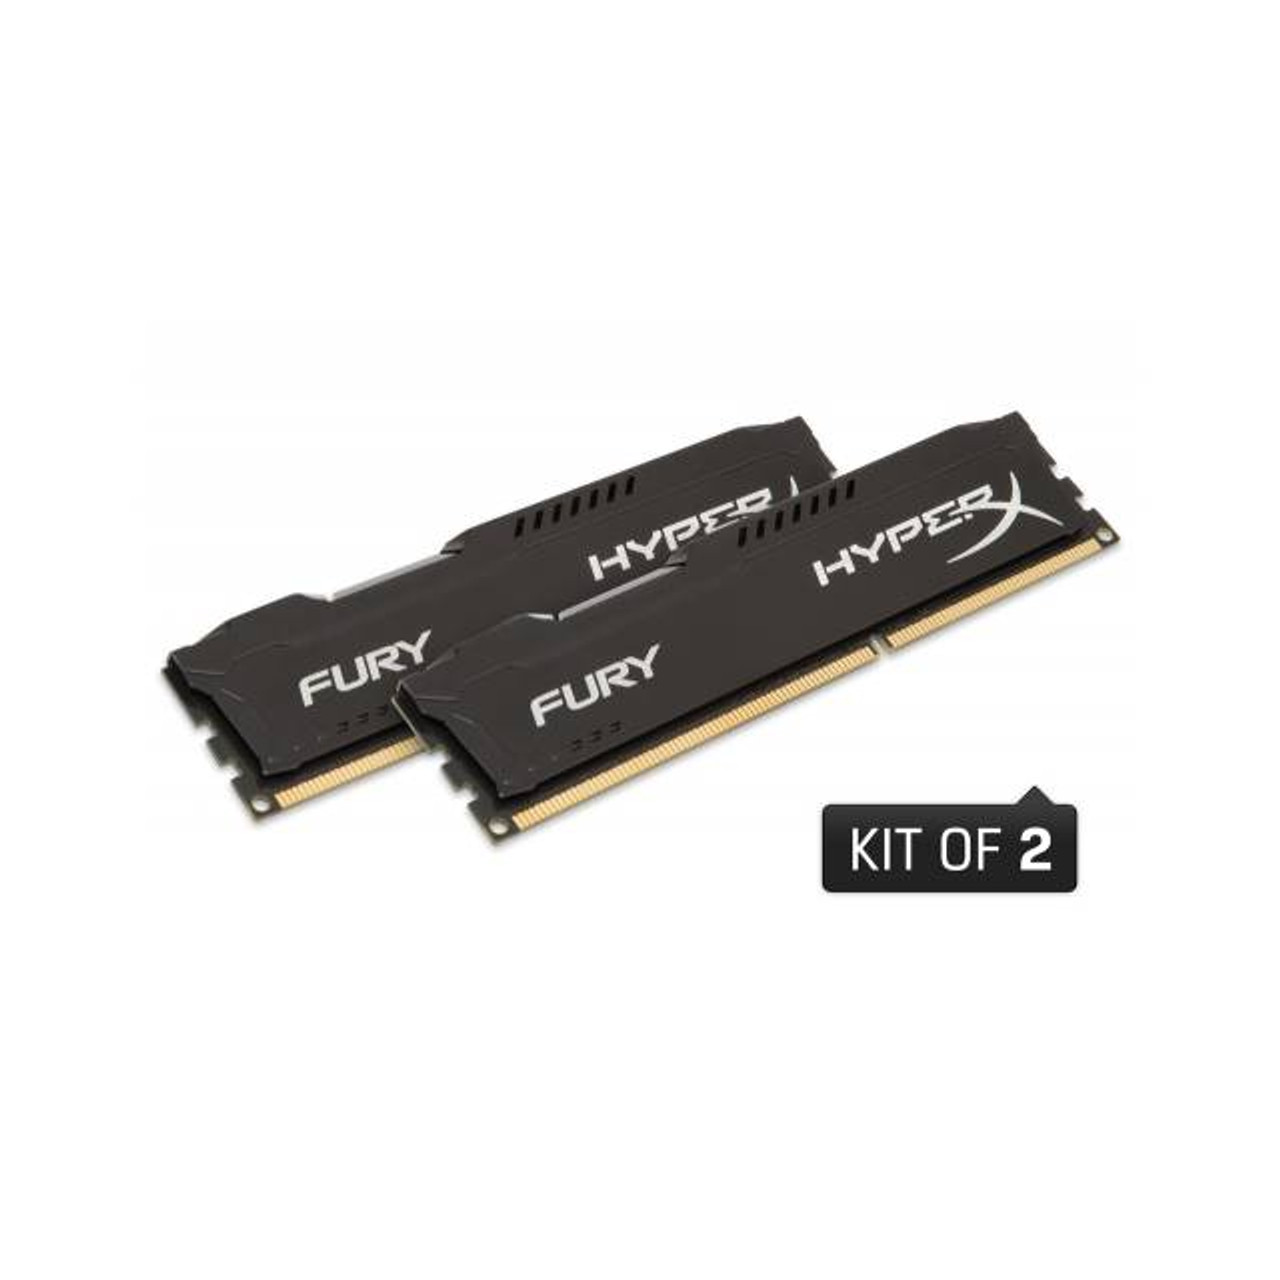 Kingston HyperX FURY Black HX316C10FBK2/8 DDR3-1600 8GB(2x4GB)/512Mx64 CL10 Memory Kit